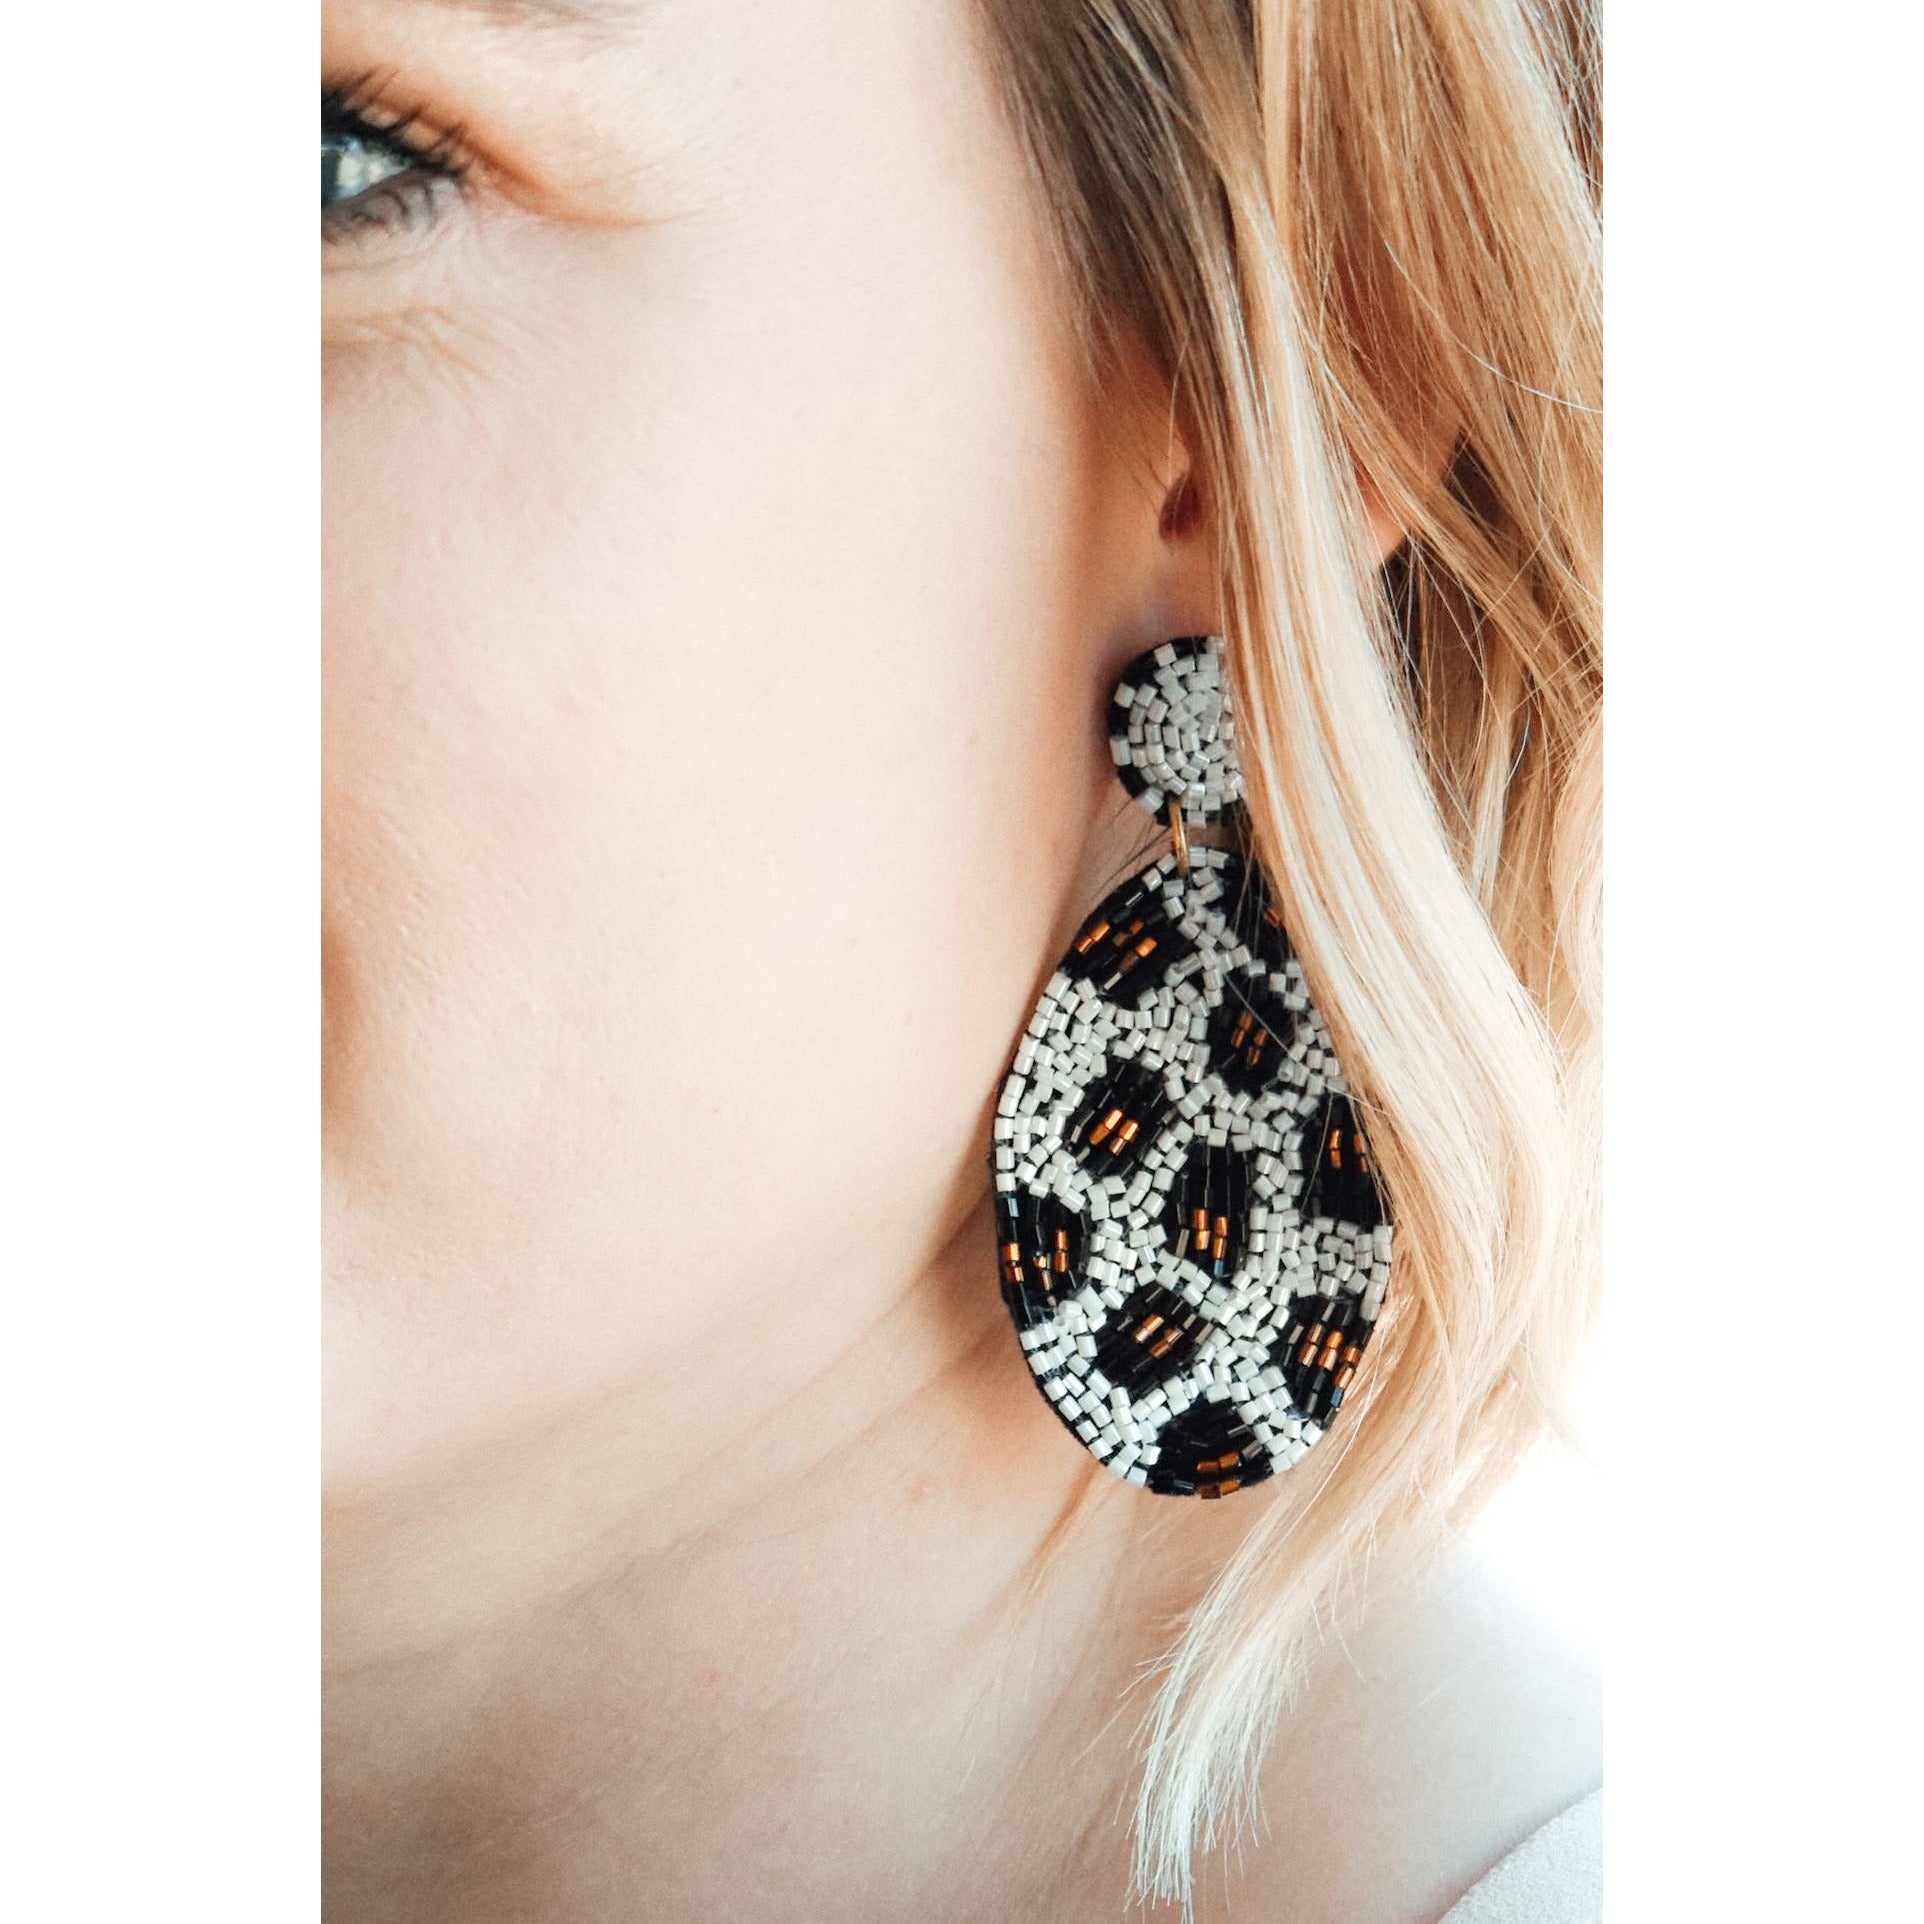 Poison Ivy Earrings - Oval Animal Print Seed Bead Earrings Jewelry